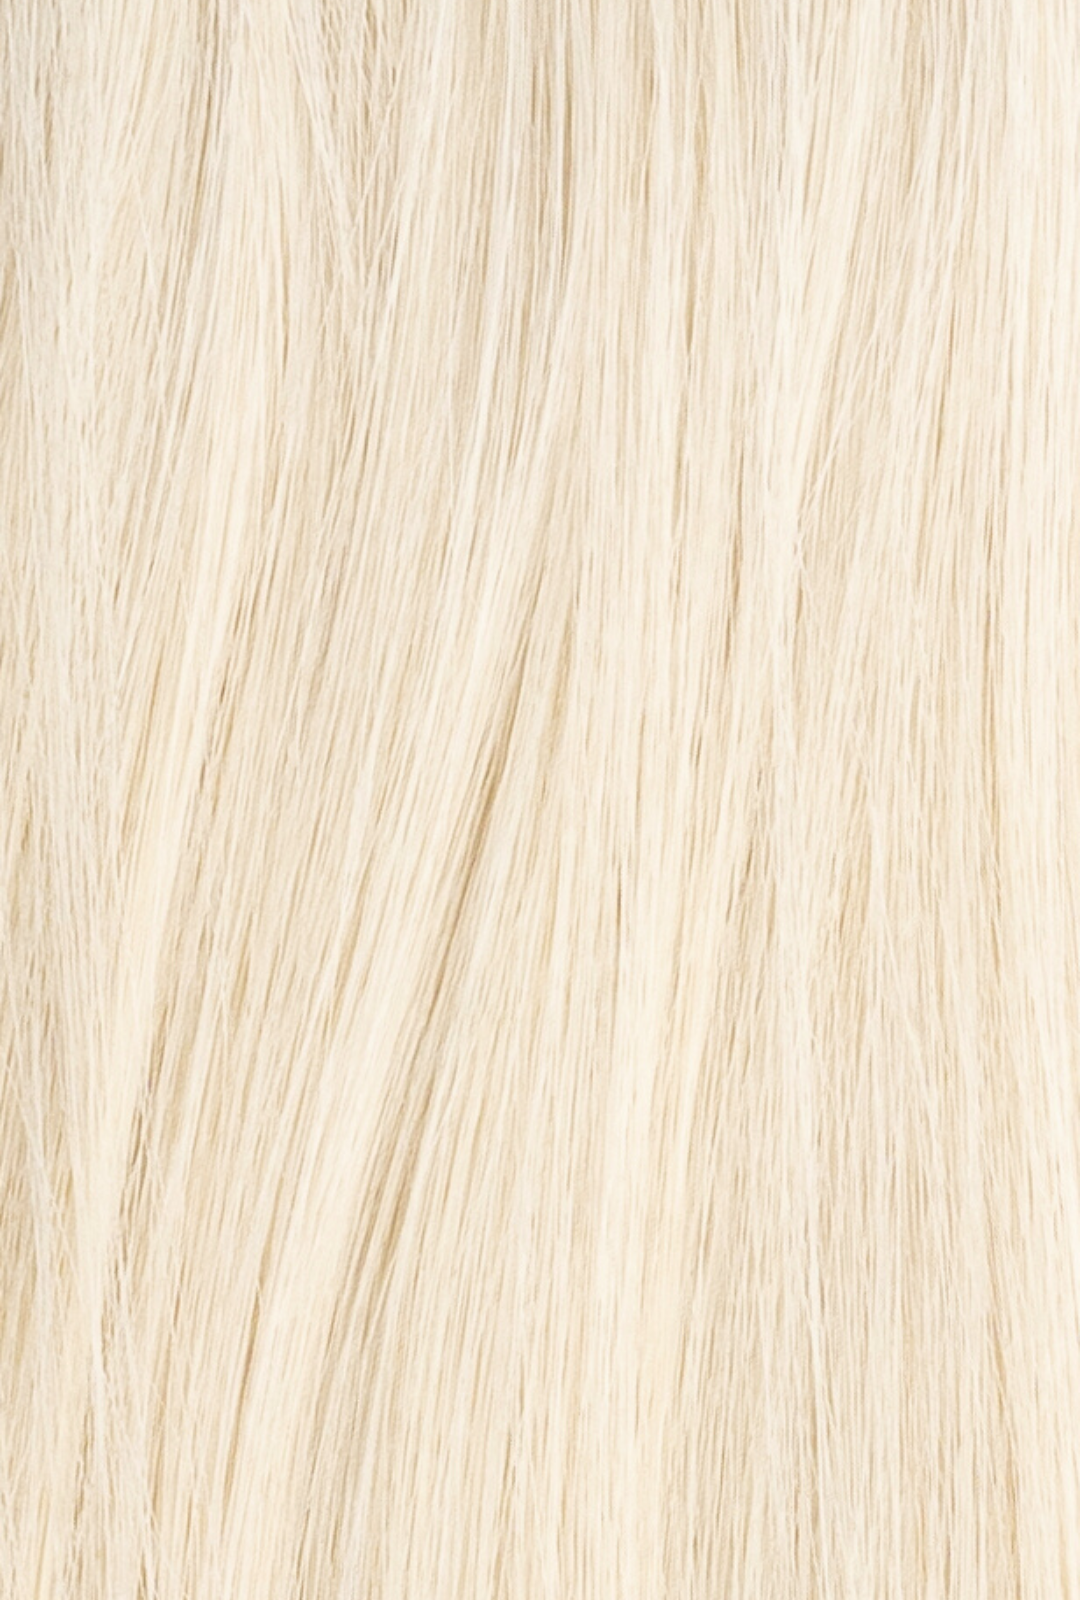 Laced Hair Keratin Bond Extensions #60 (Platinum)